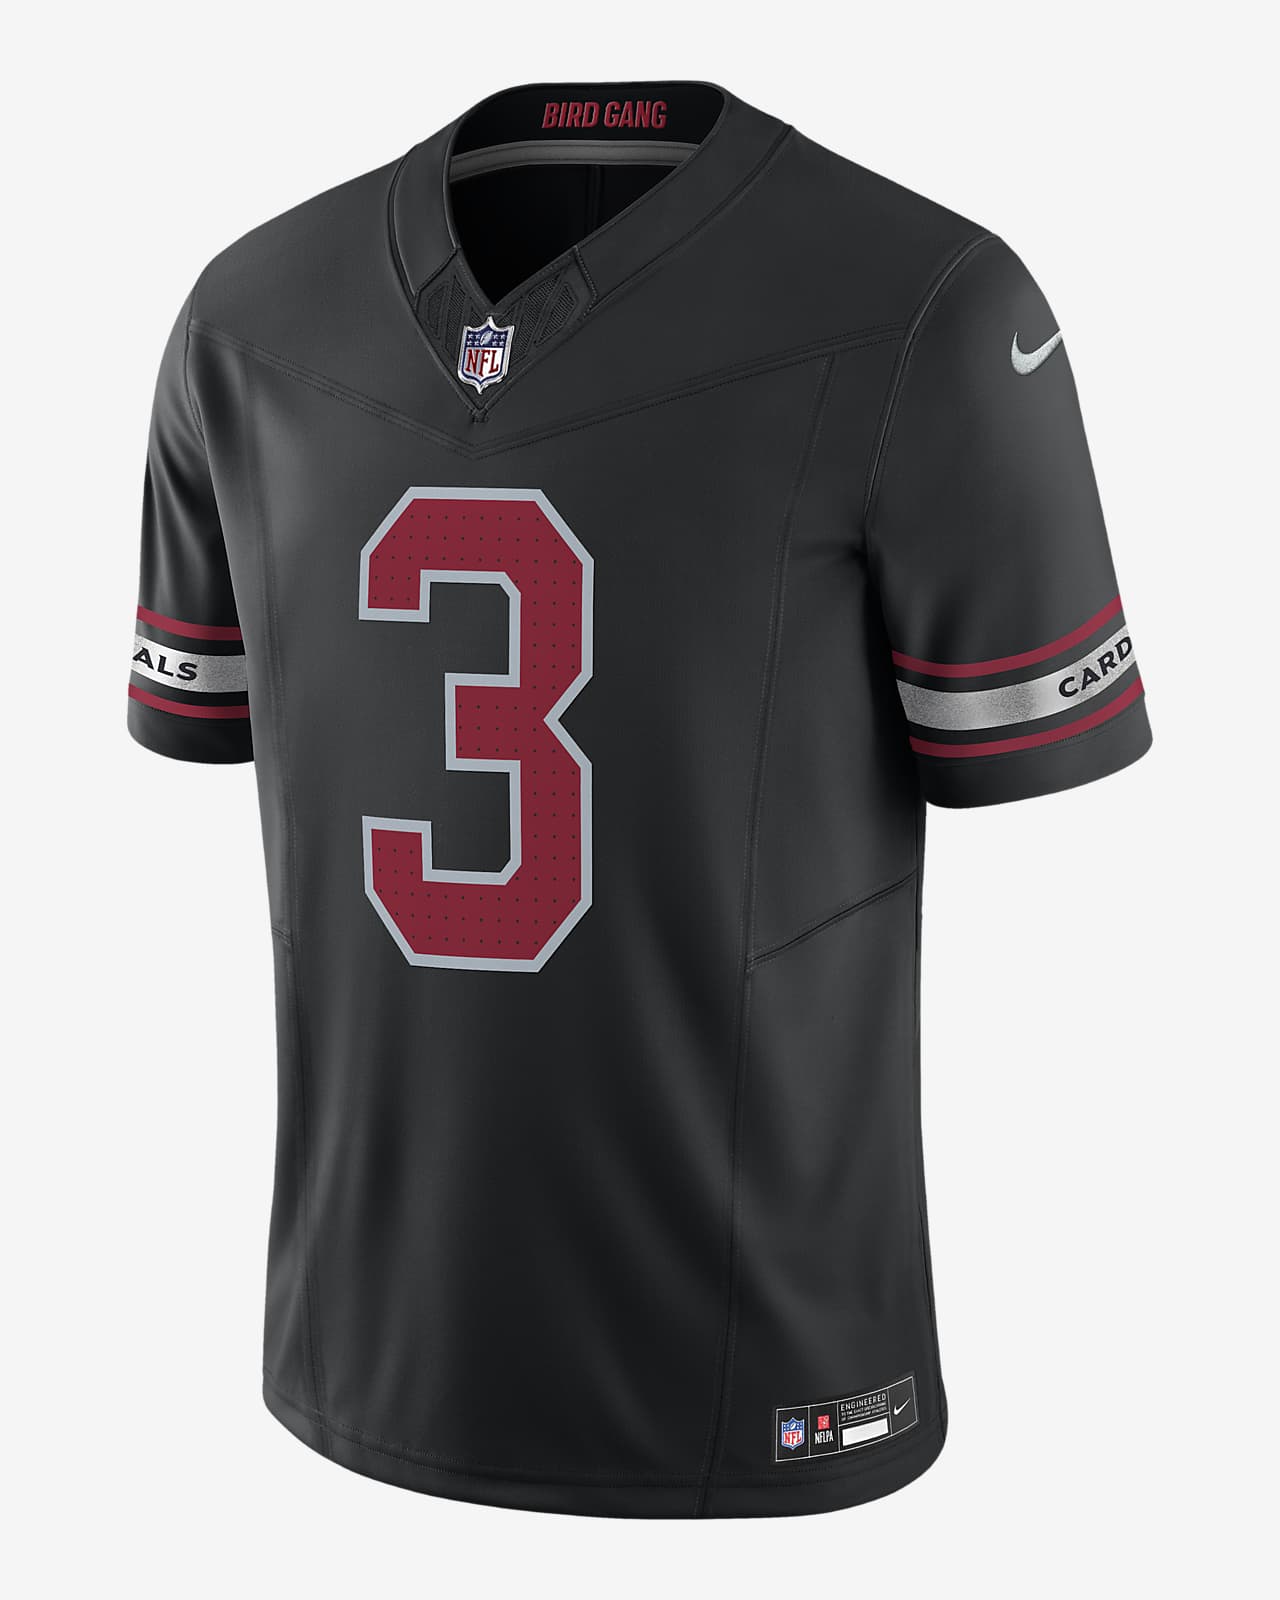 Budda Baker Arizona Cardinals Men's Nike Dri-FIT NFL Limited Football Jersey